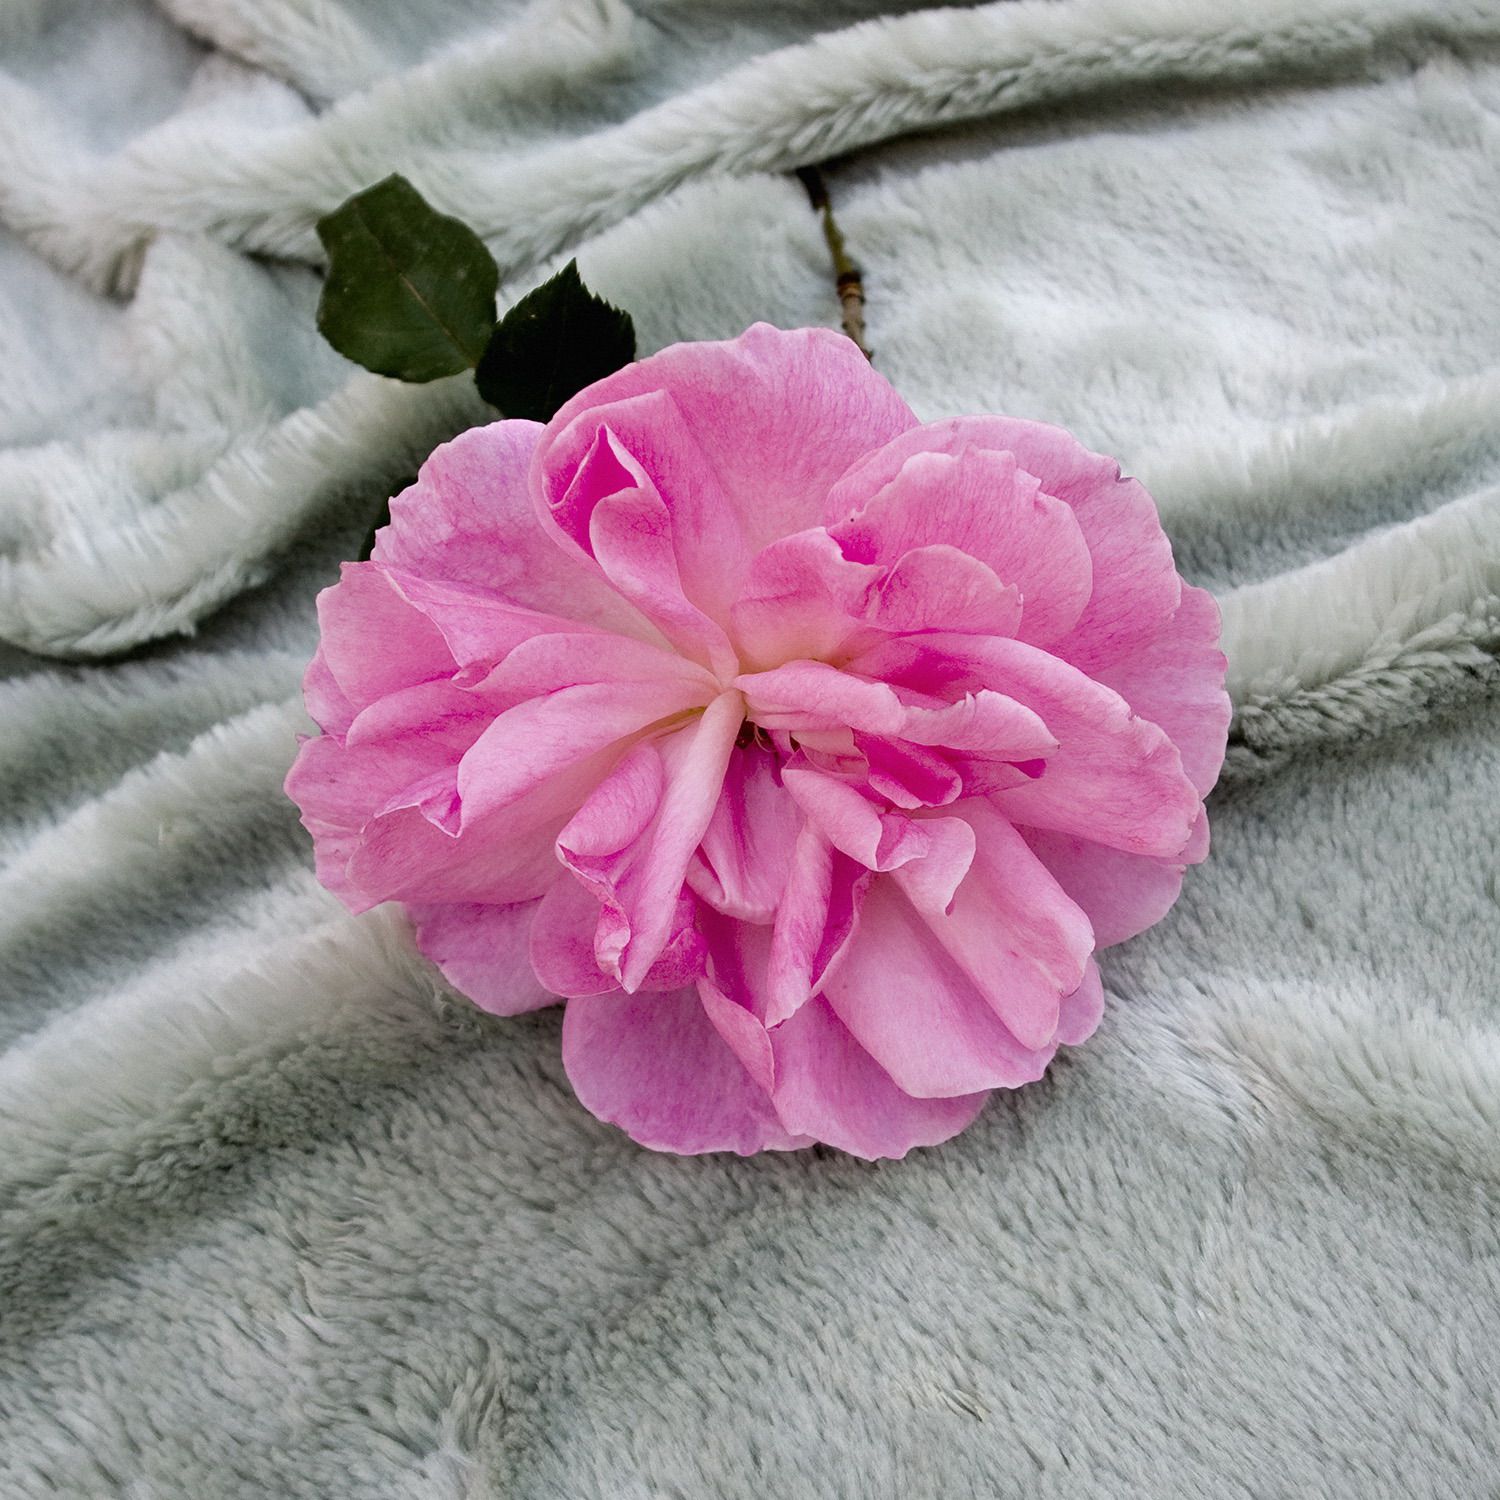 The making of a rose. Fotografa digital. 70x70 cm. 2008